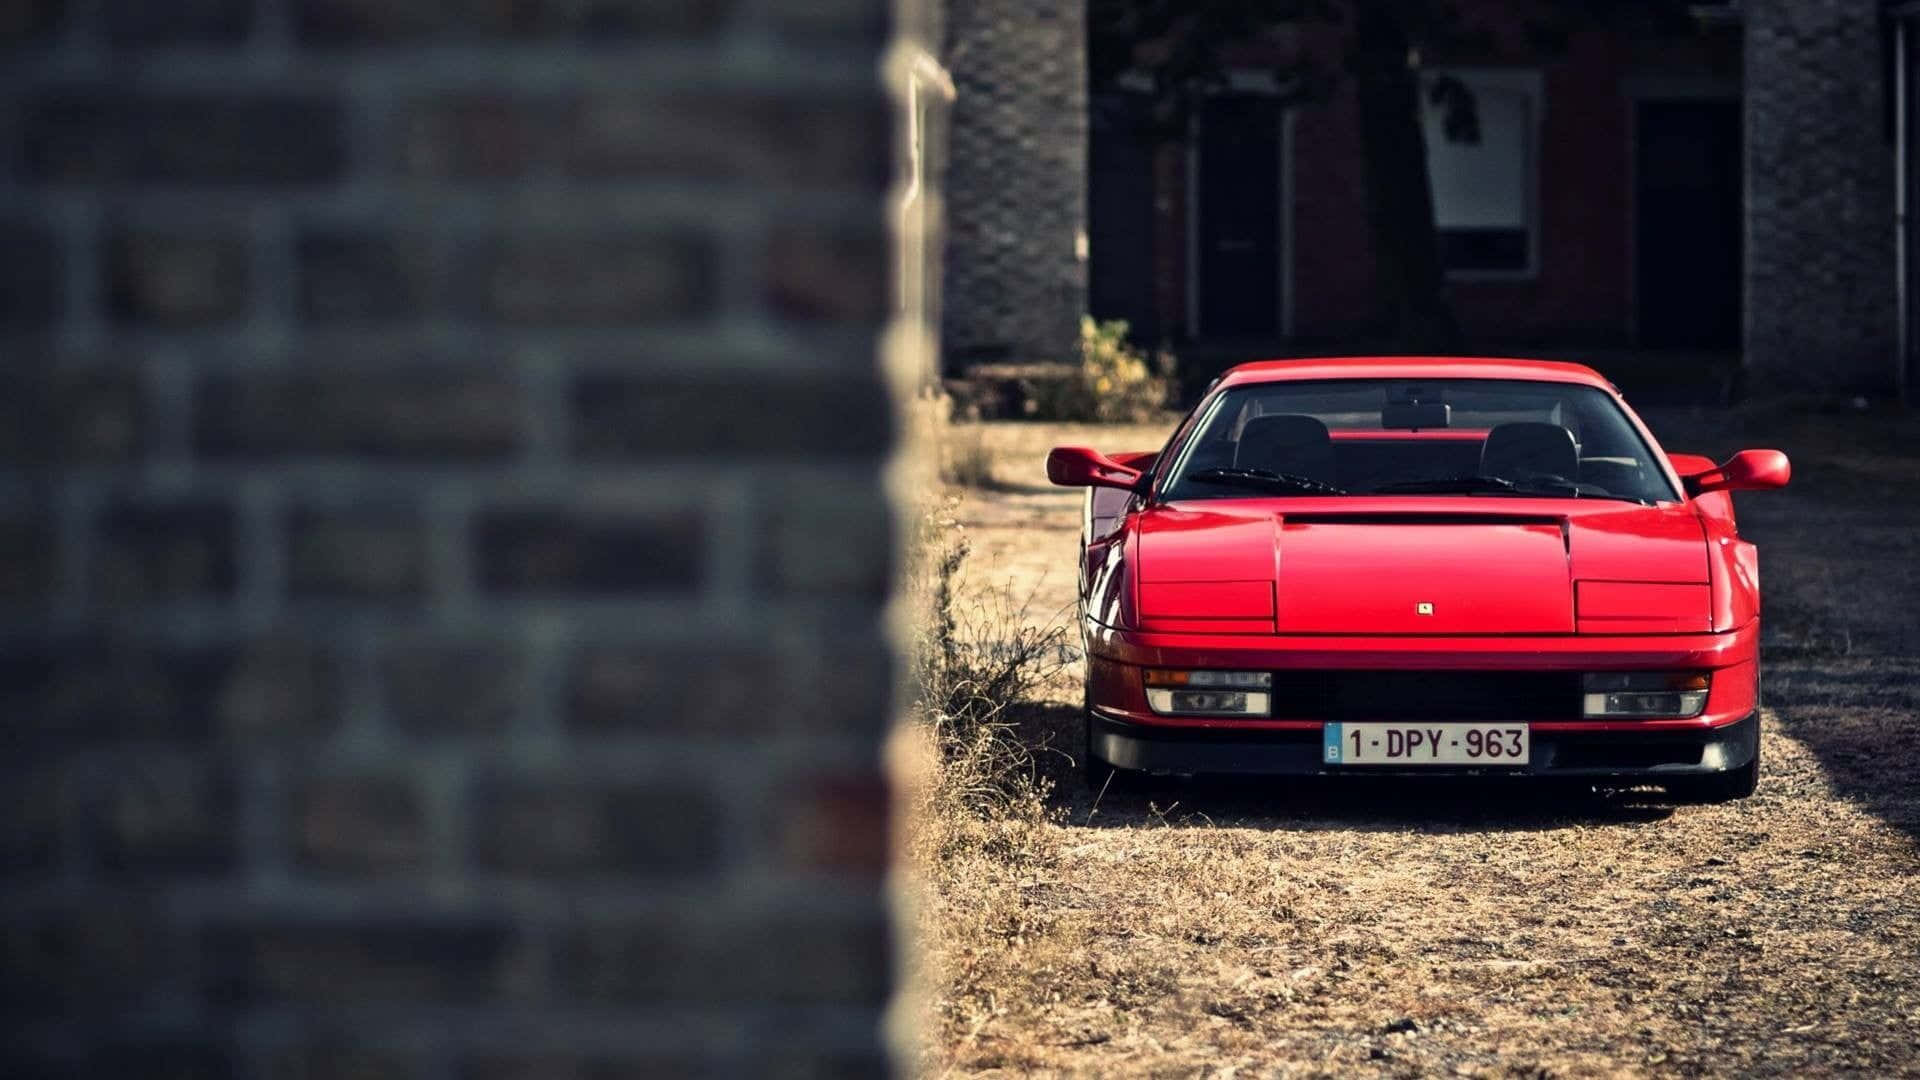 Sleek Red Ferrari Testarossa on the Road Wallpaper